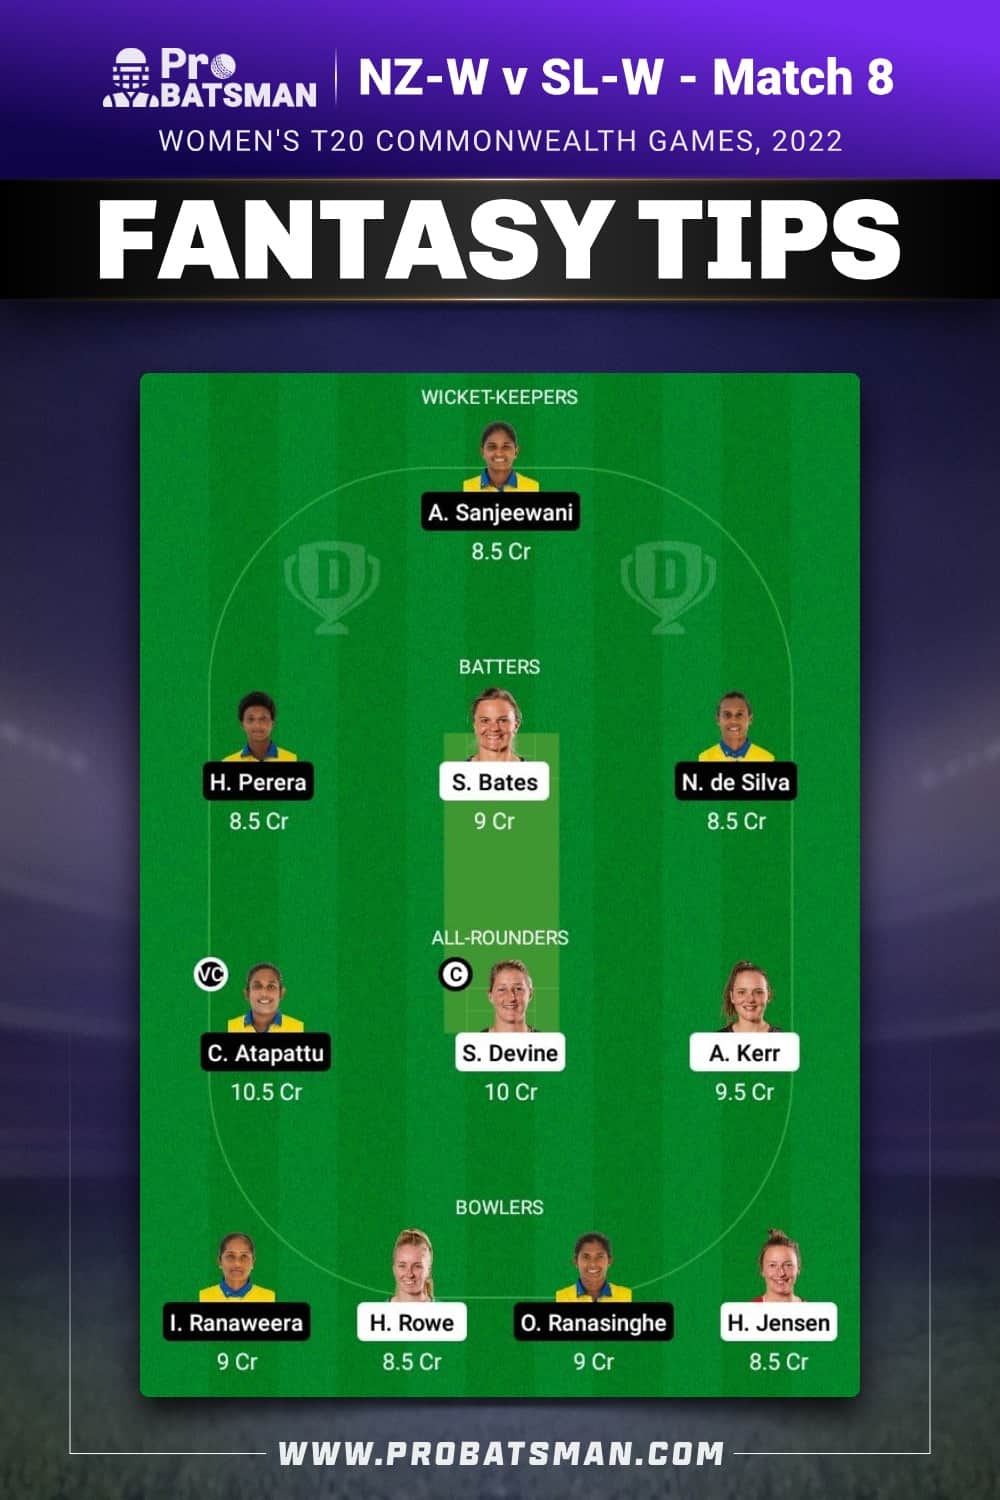 NZ-W vs SL-W Dream11 Prediction - Fantasy Team 1